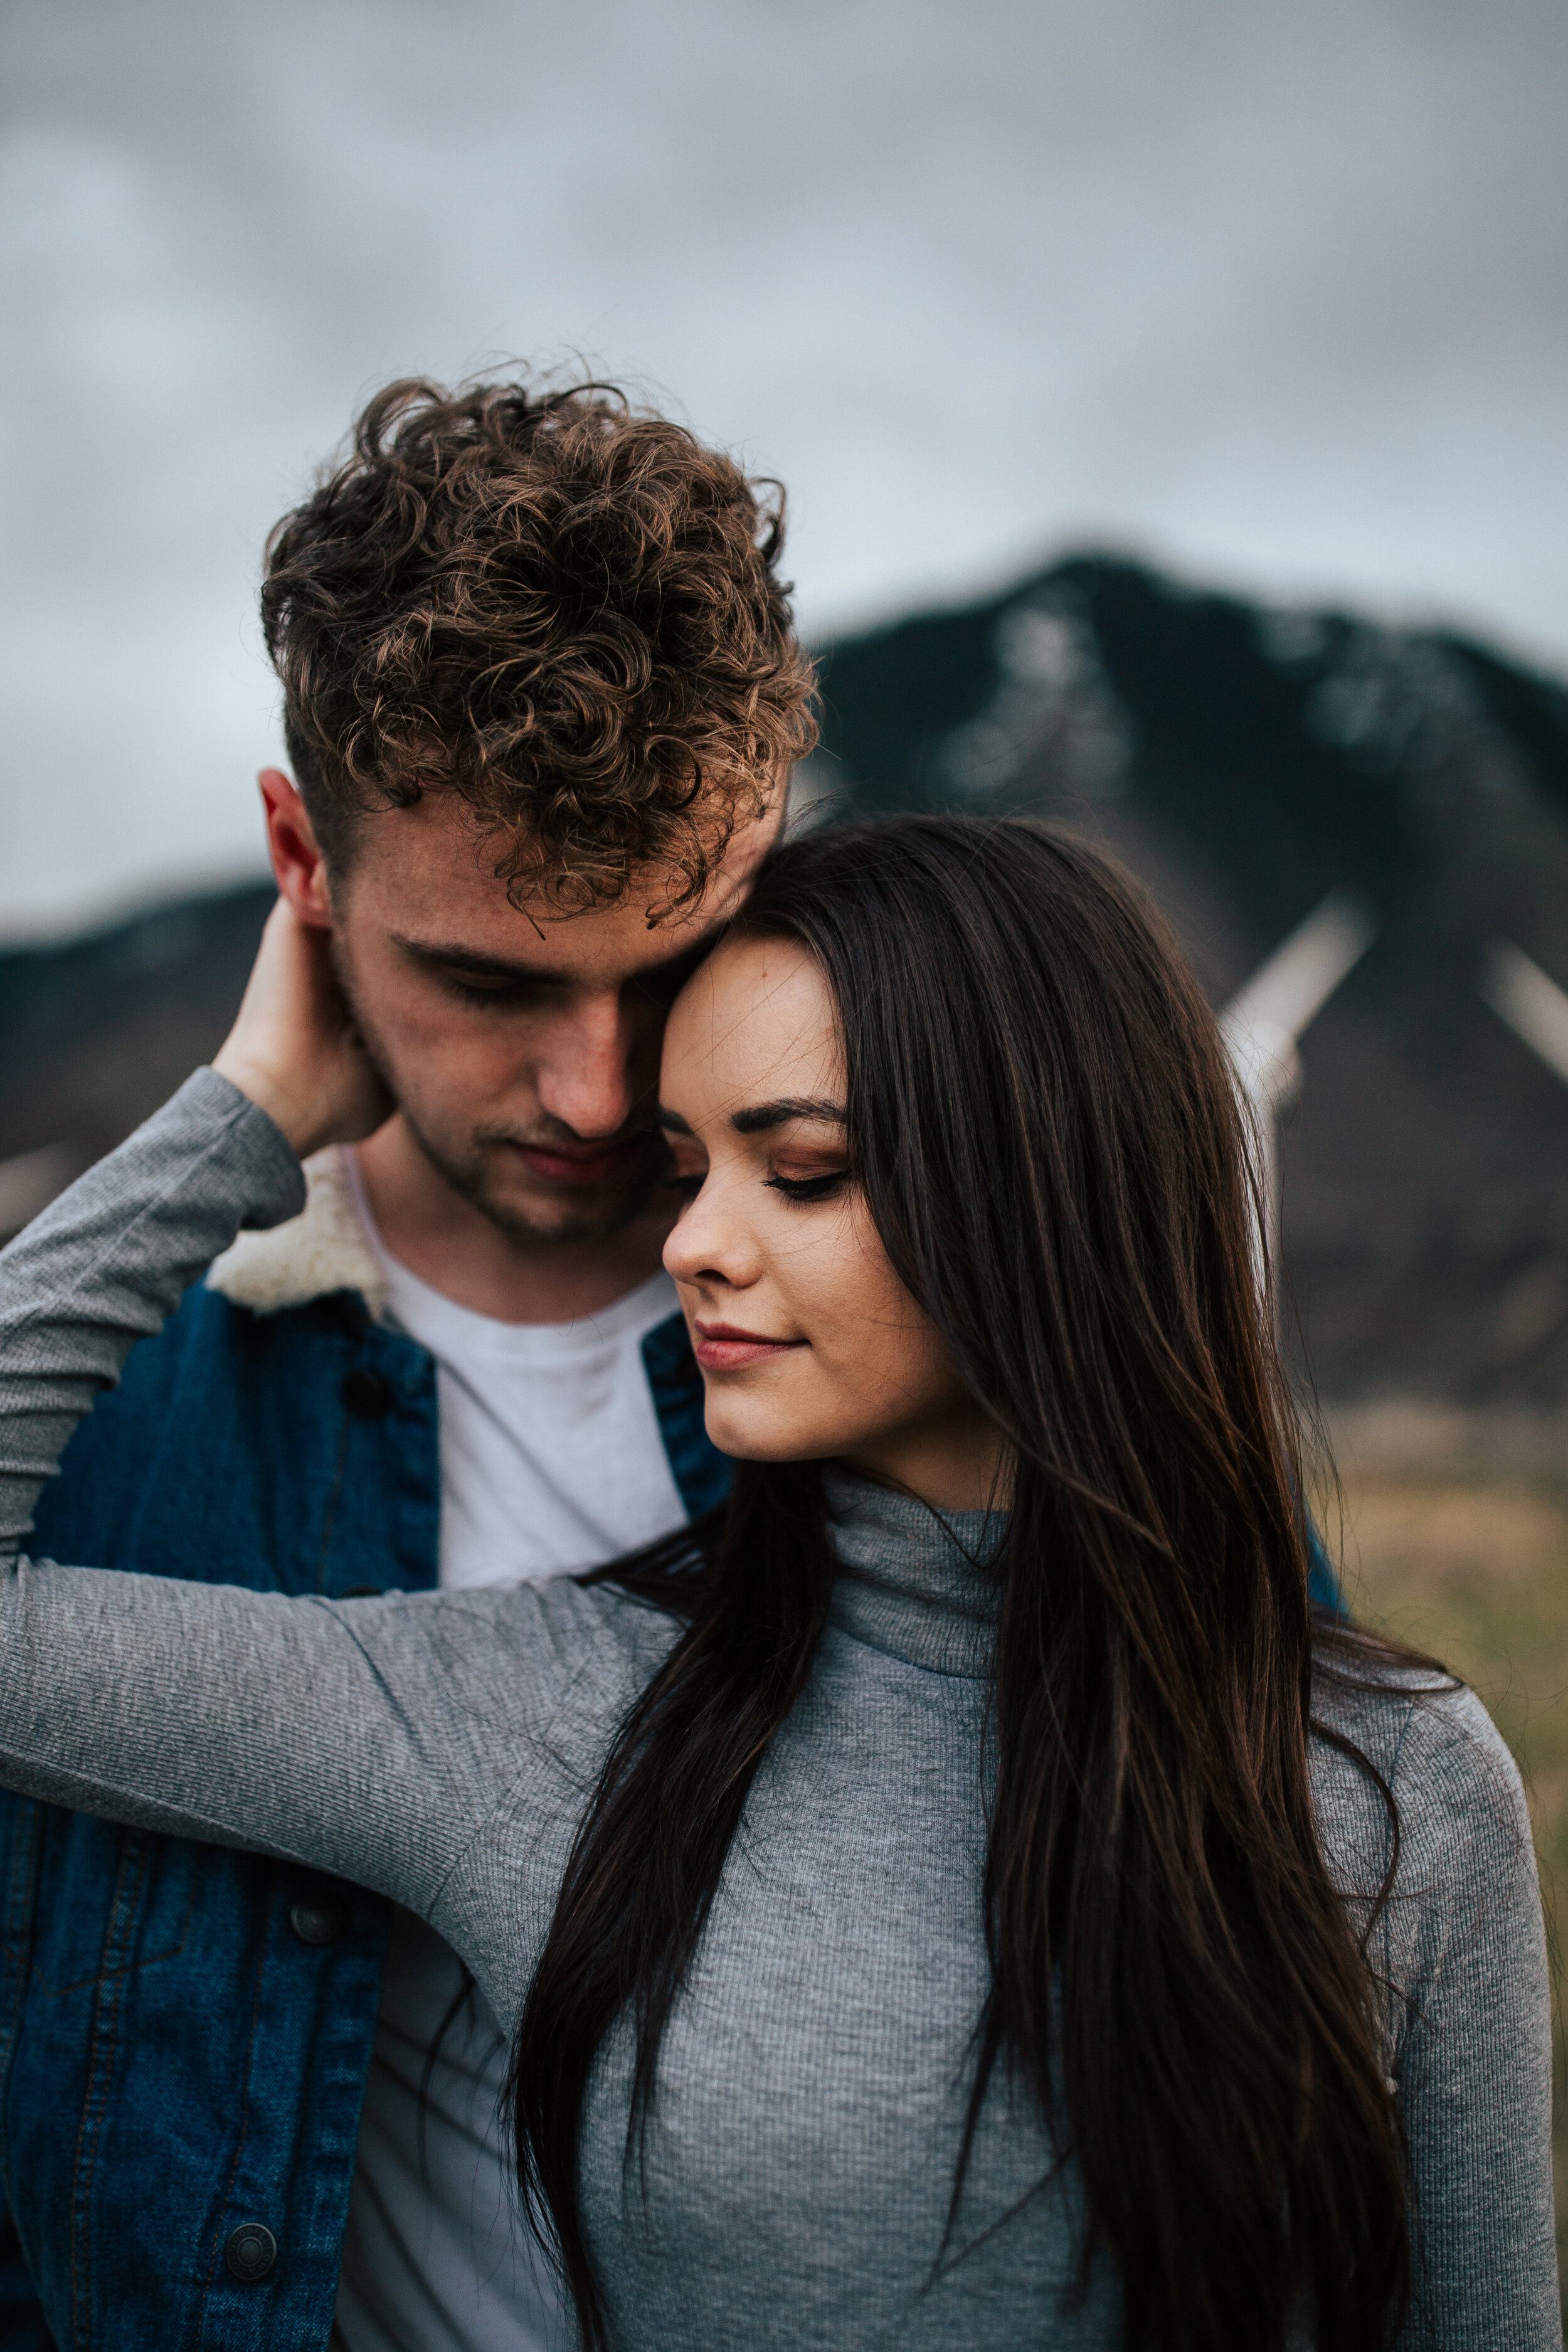 Windy overcast moody couple session. Utah engagements young couple #utahengagements #weddingphotographer #oregonphotographer #coupleshoot